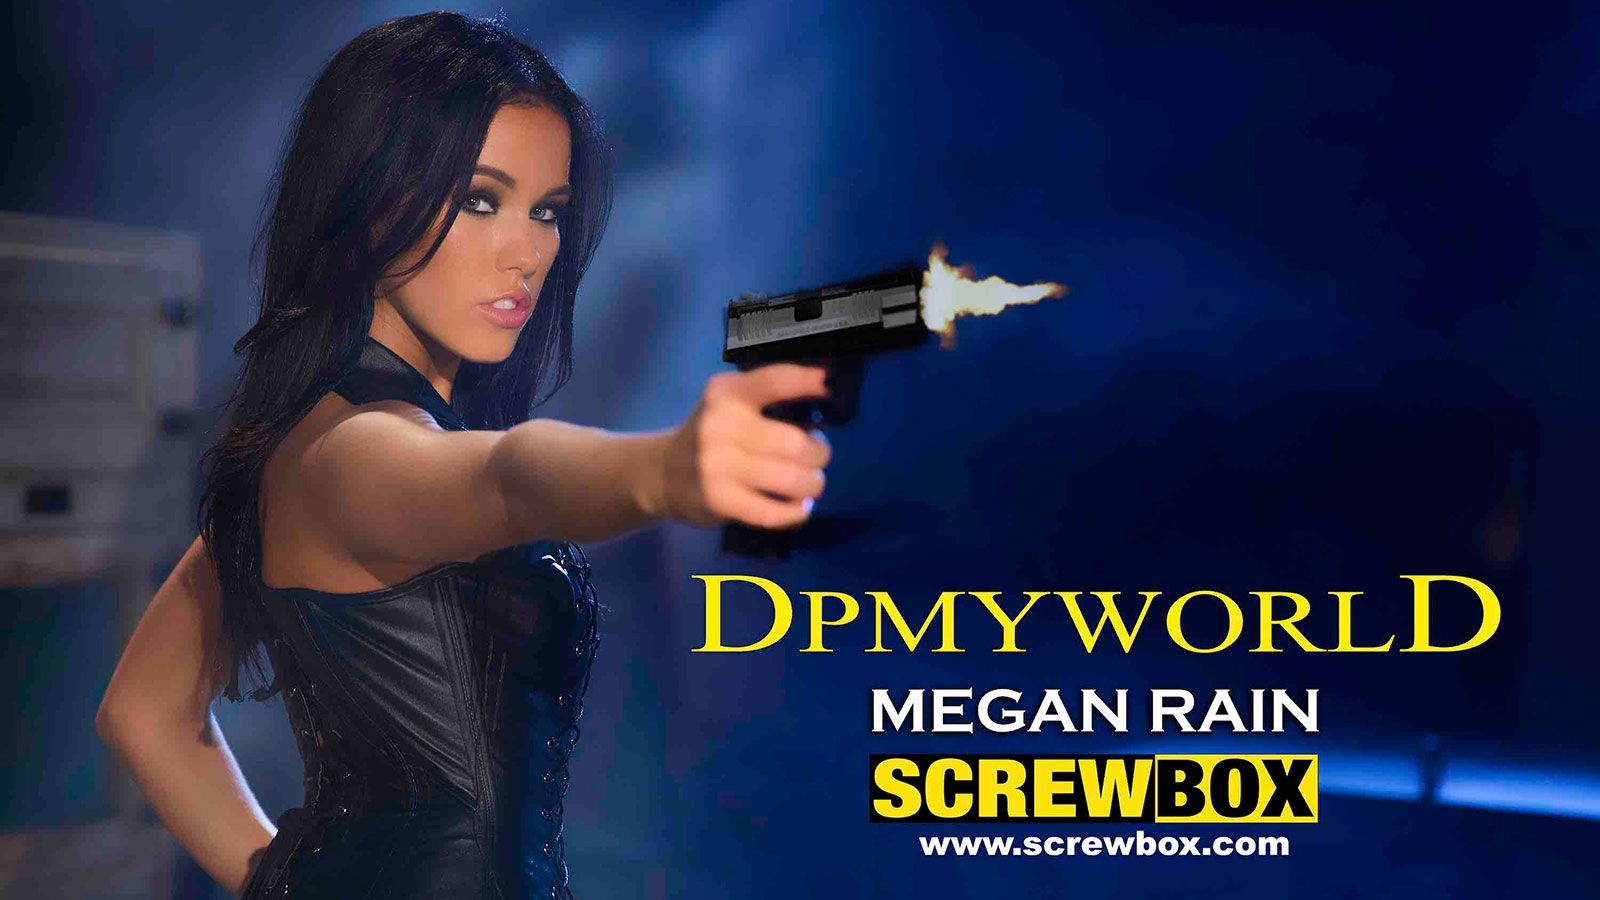 Megan Rain Stars In Screwbox.com 'Underworld' Parody Scene